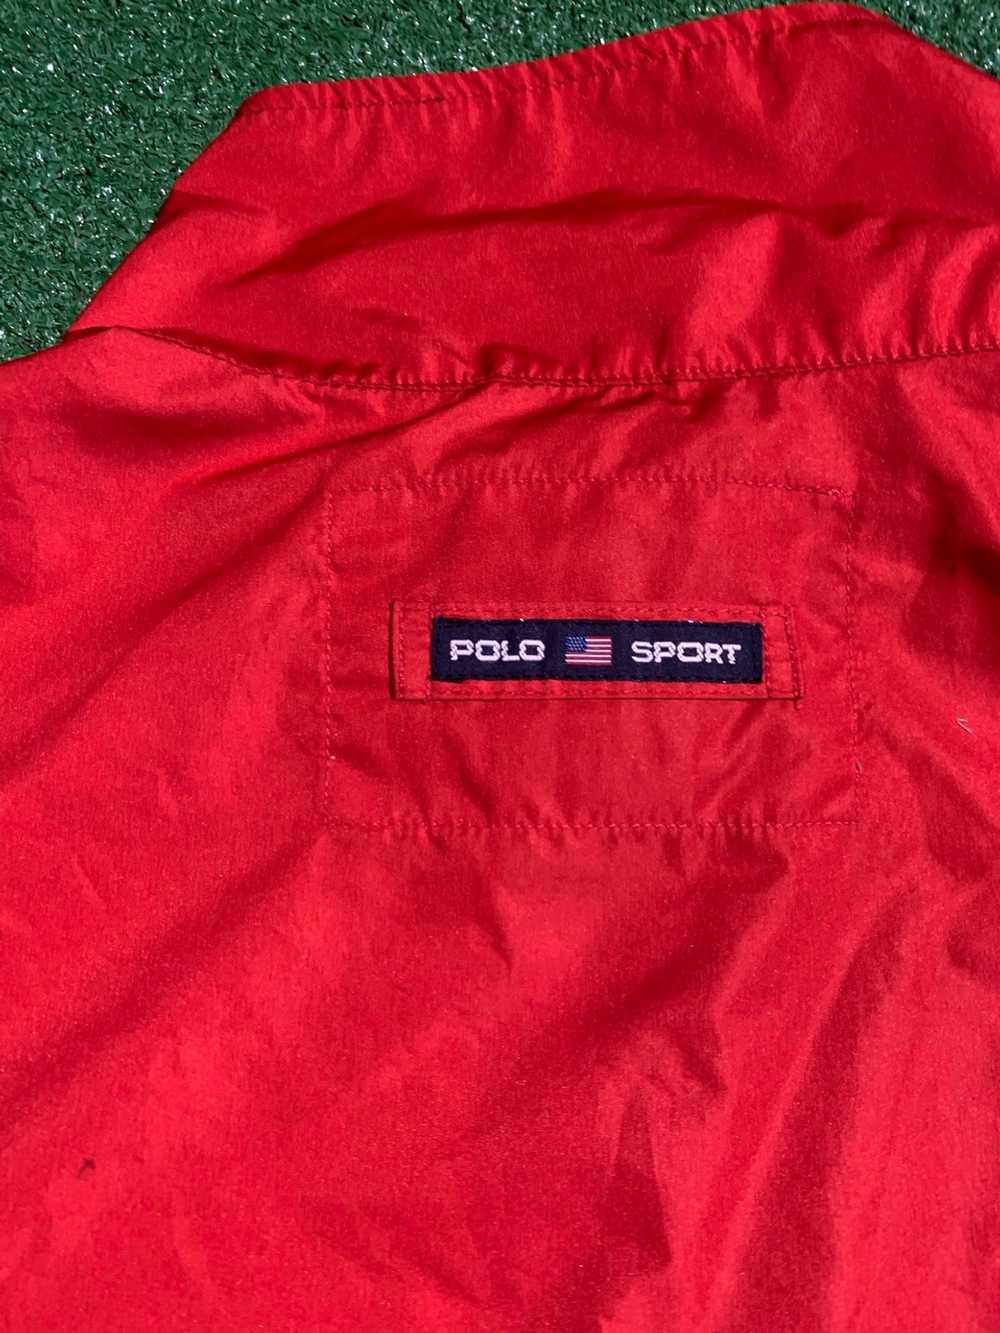 Polo Ralph Lauren Vintage polo jacket - image 4